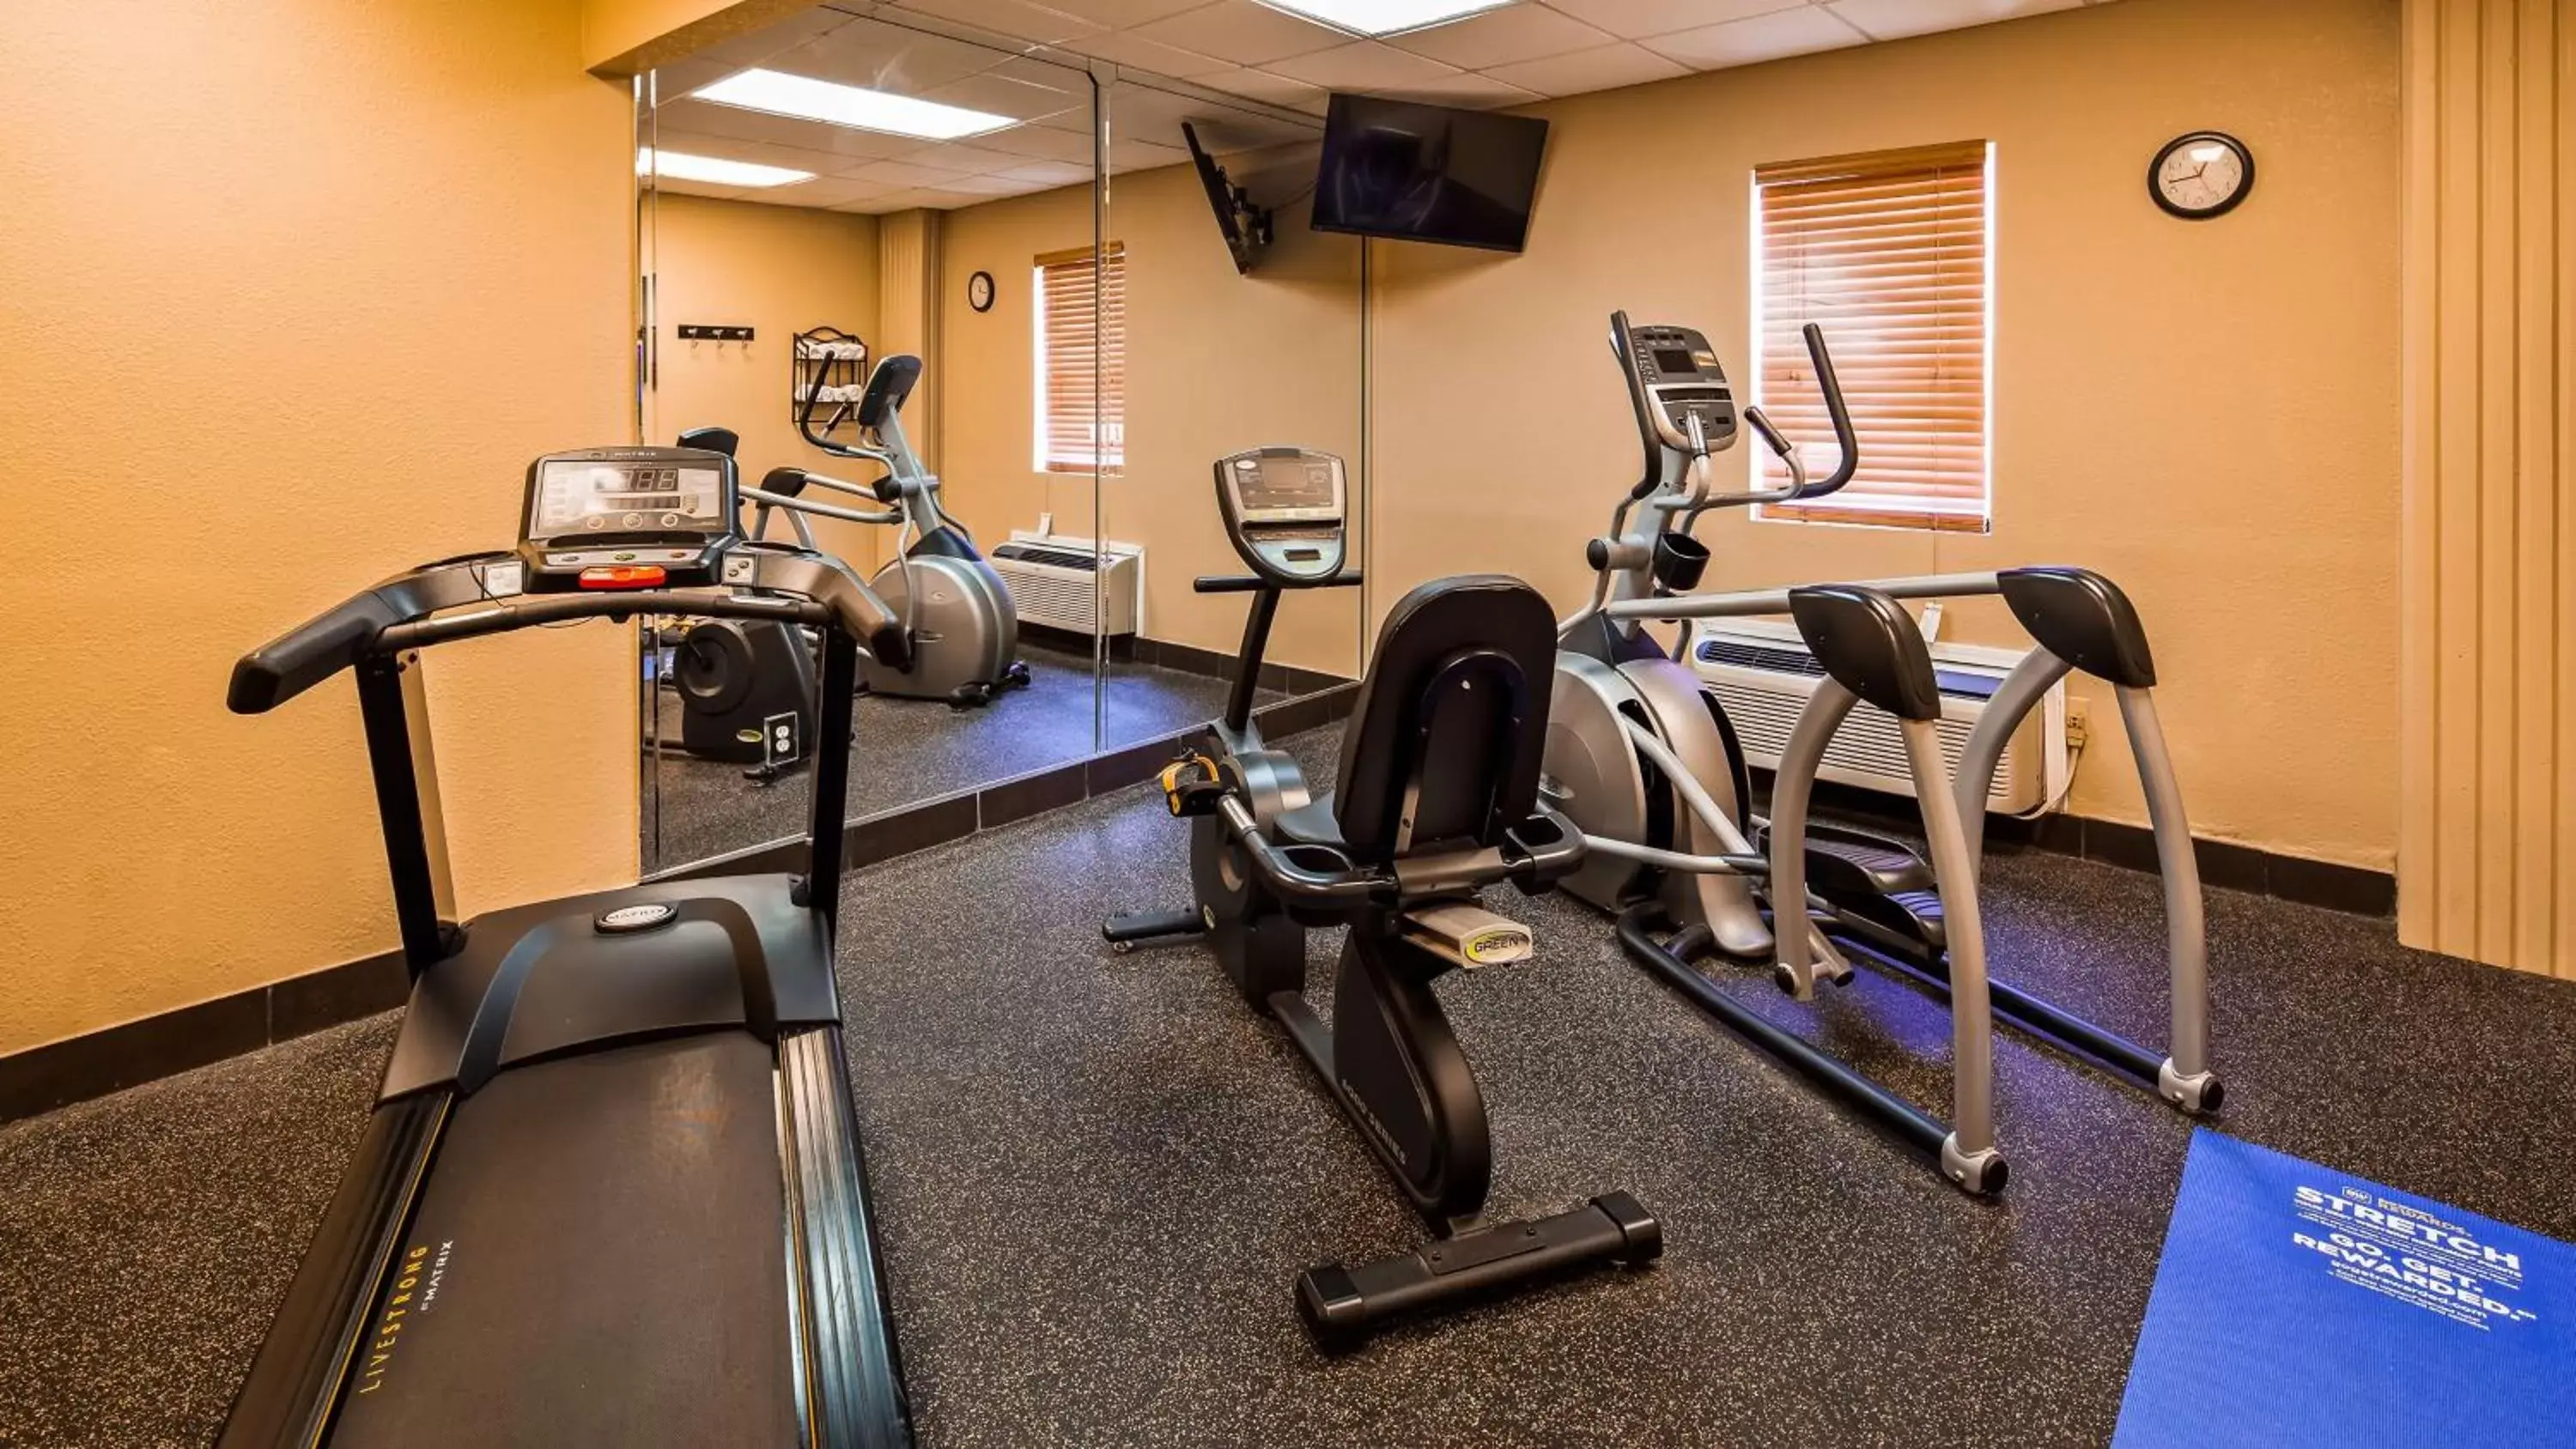 Fitness centre/facilities, Fitness Center/Facilities in Best Western Plus Gen X Inn